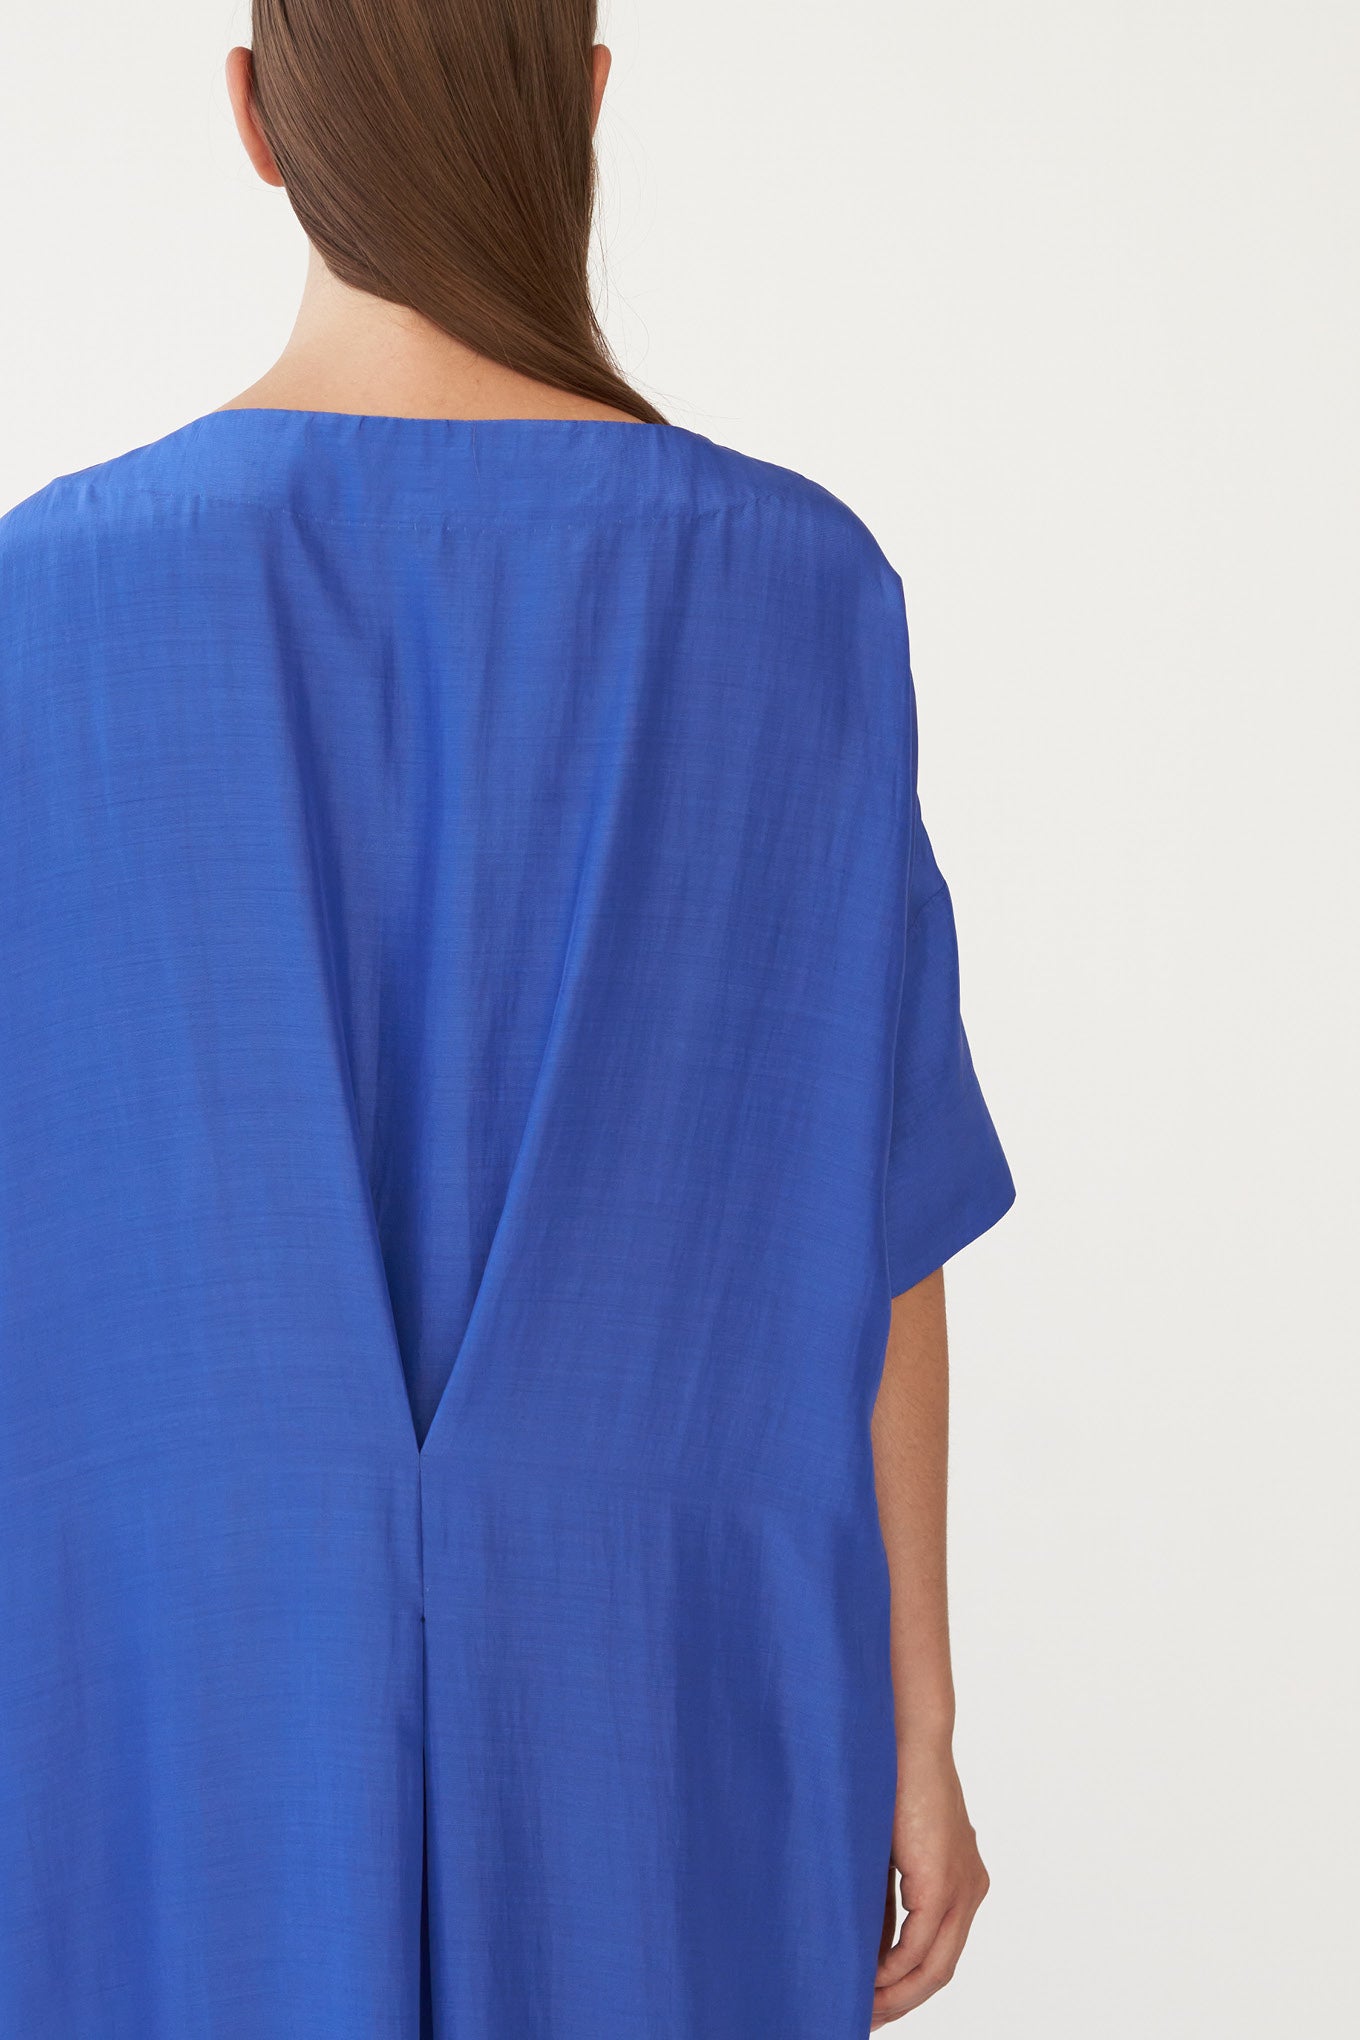 MAIA LONG DRESS - KLEIN BLUE